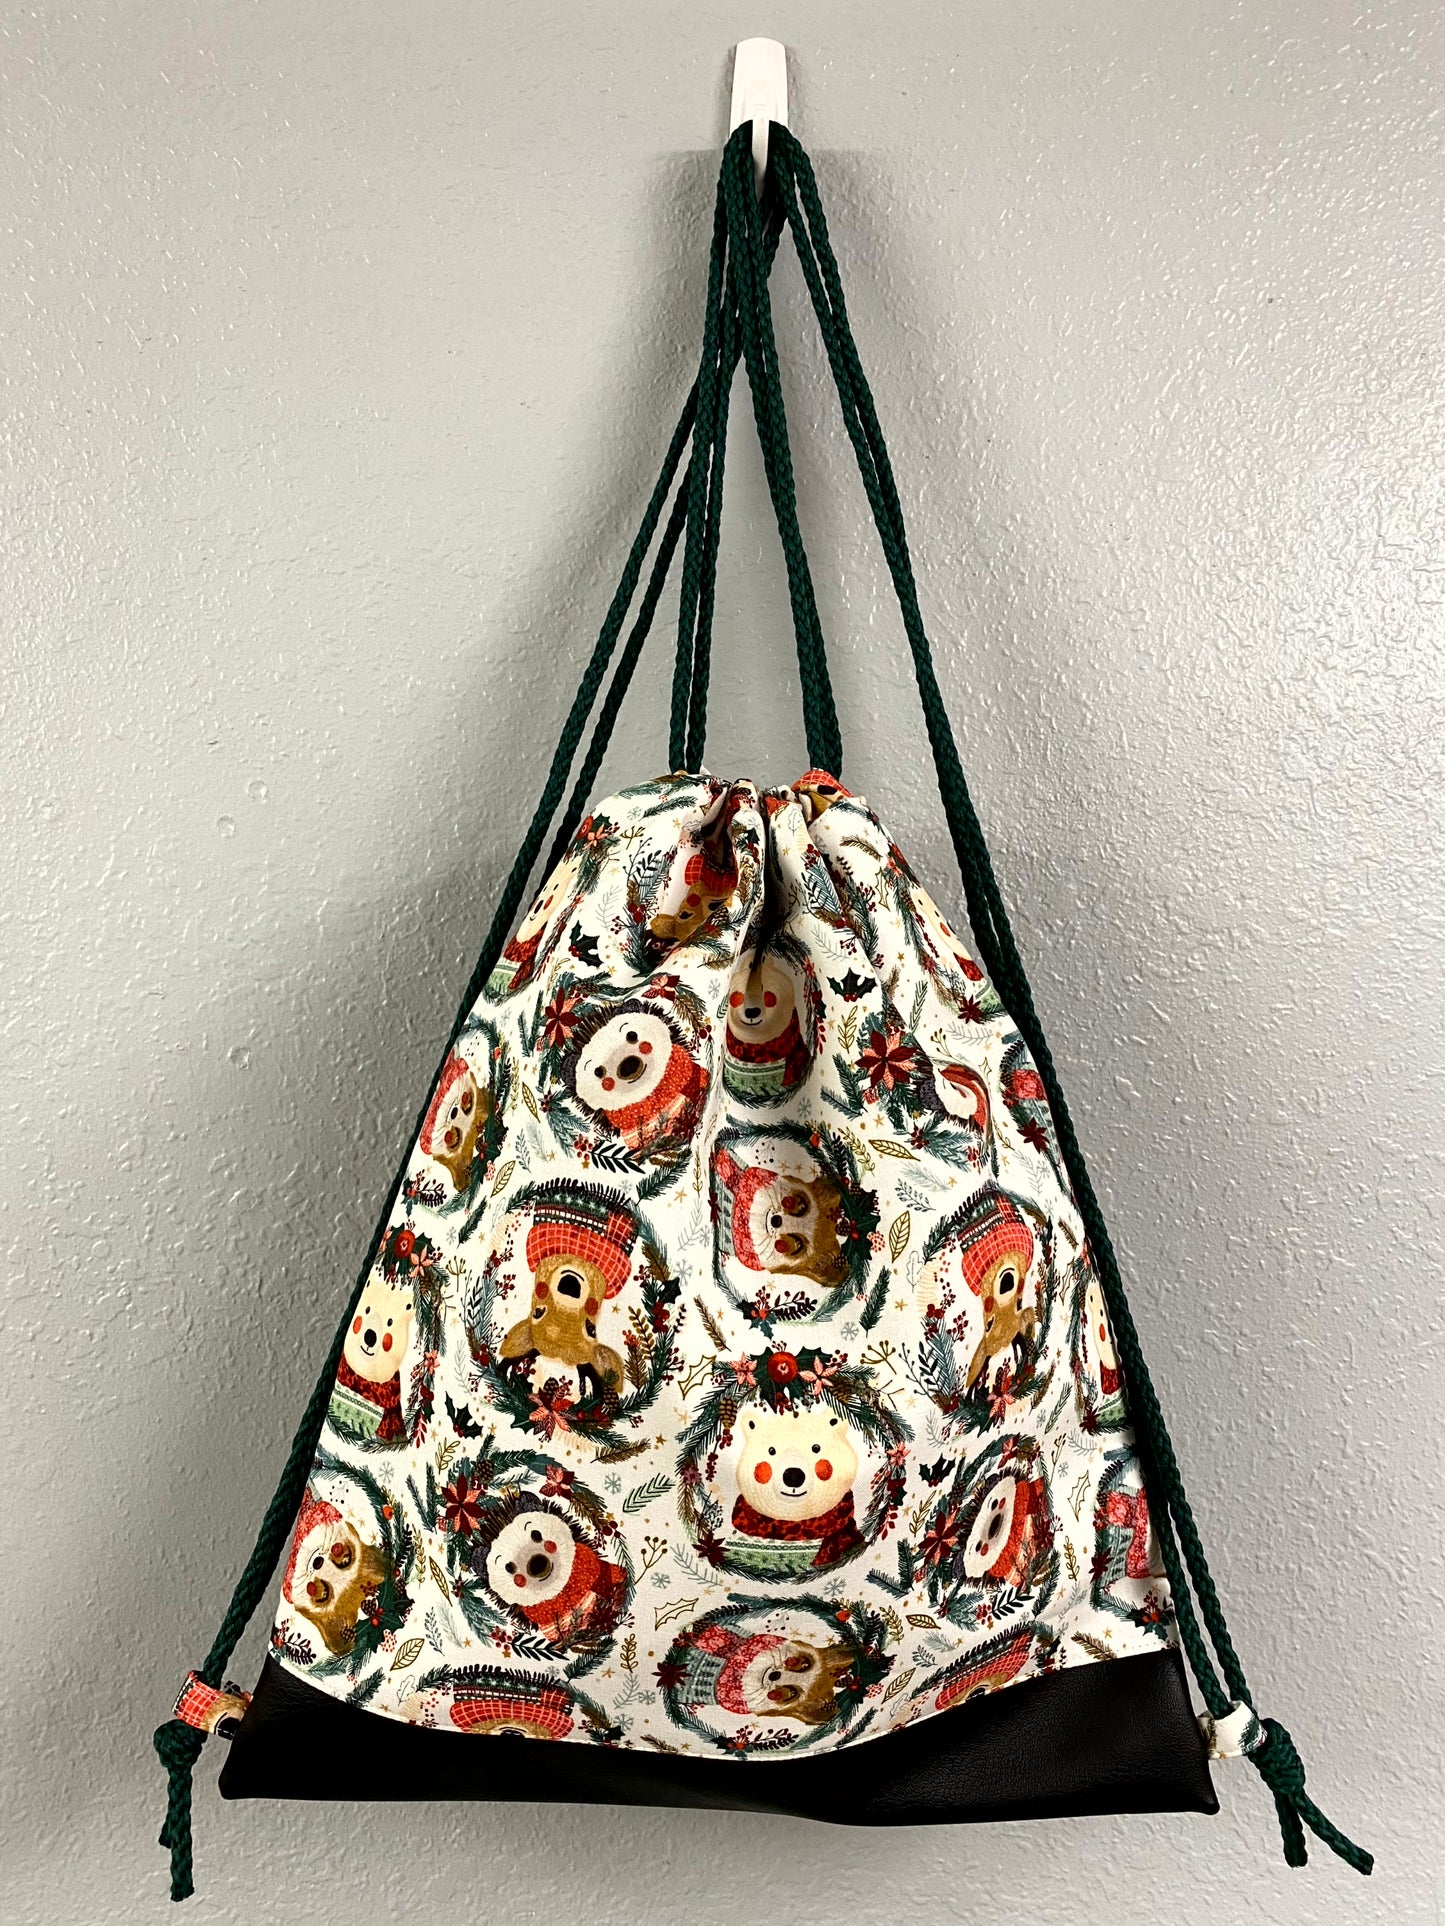 Woodland Drawstring Bag - Handmade Drawstring Bag – Drawstring Backpack - On the Go Bag - Overnight Bag